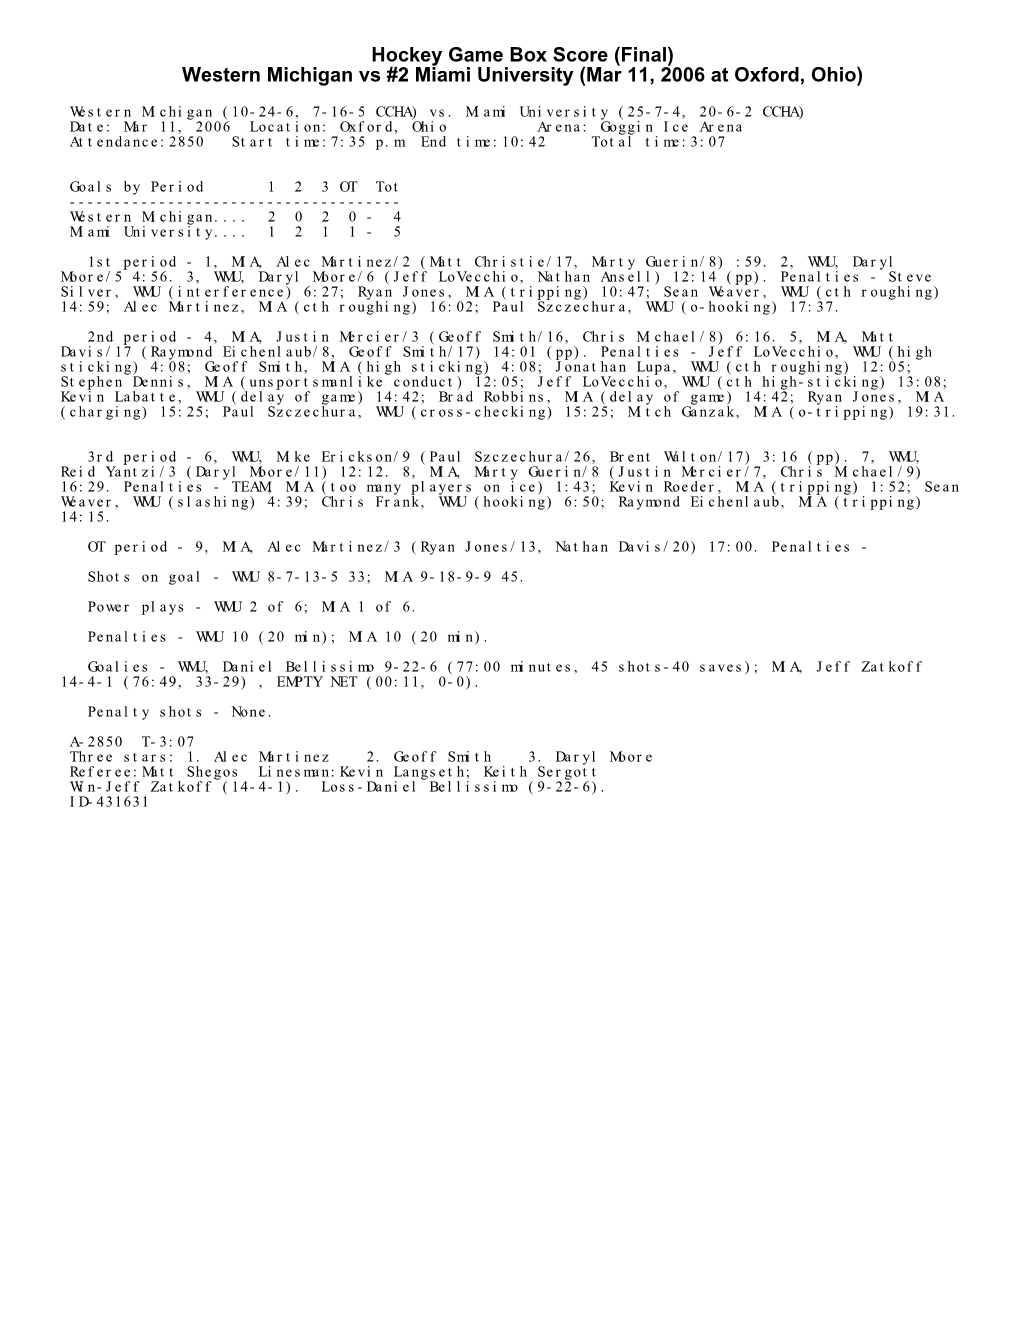 Hockey Game Box Score (Final) Western Michigan Vs #2 Miami University (Mar 11, 2006 at Oxford, Ohio)